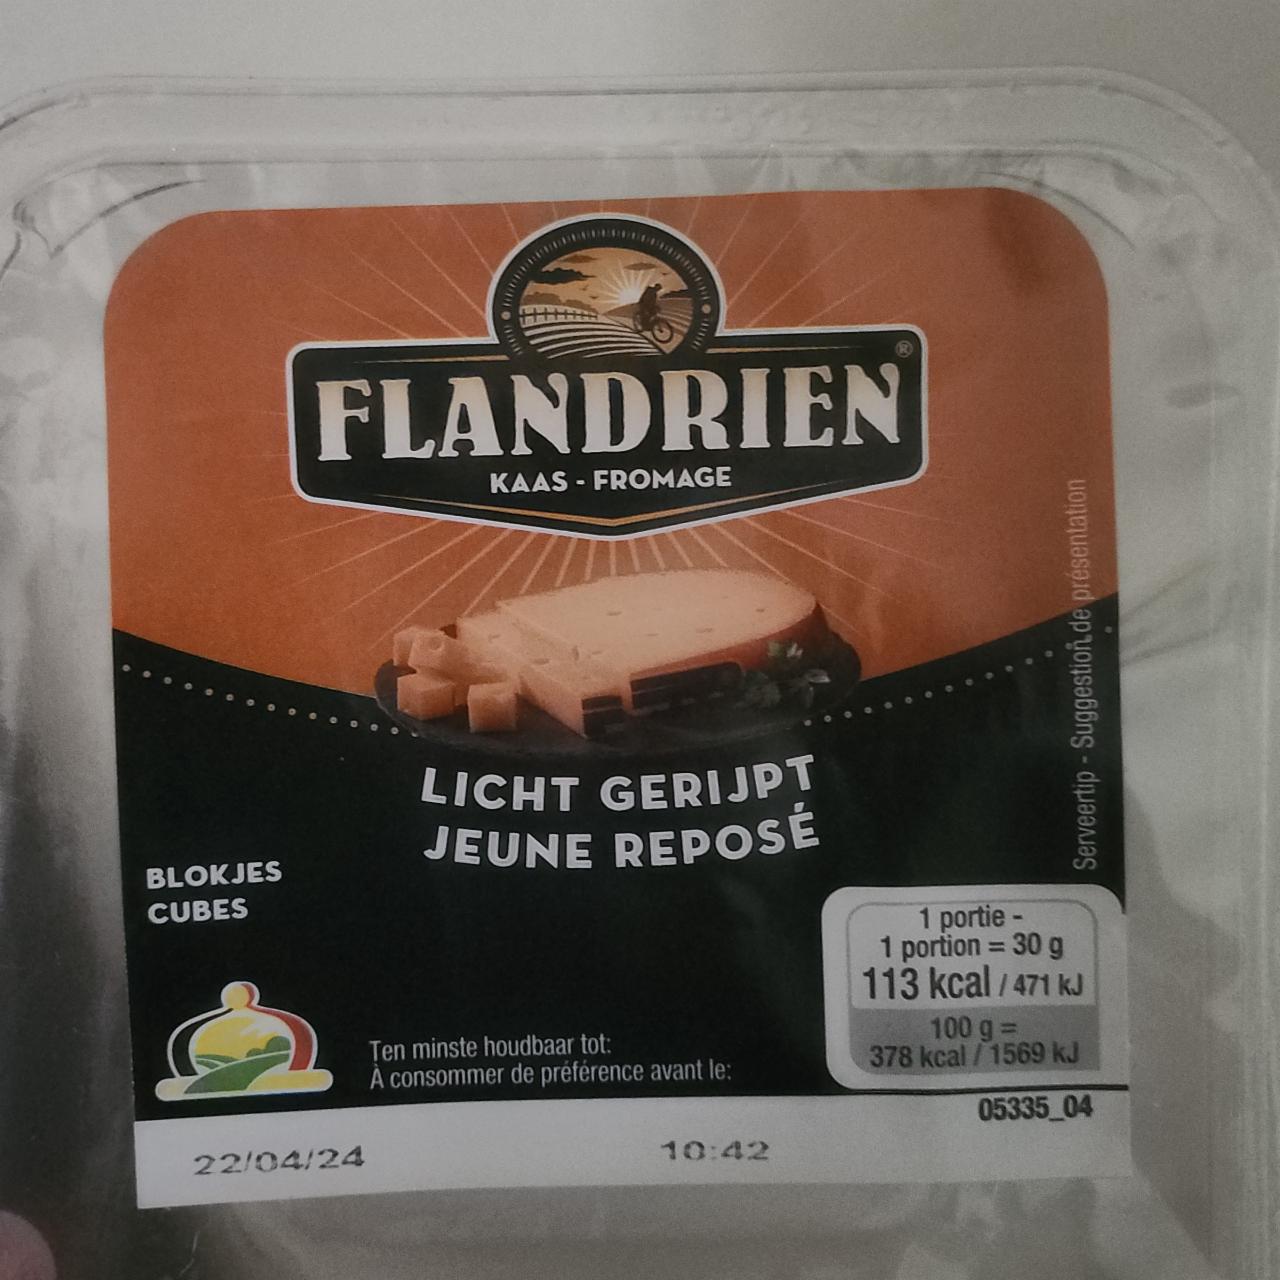 Képek - Licht gerijpt jeune reposé Flandrien kaas fromage